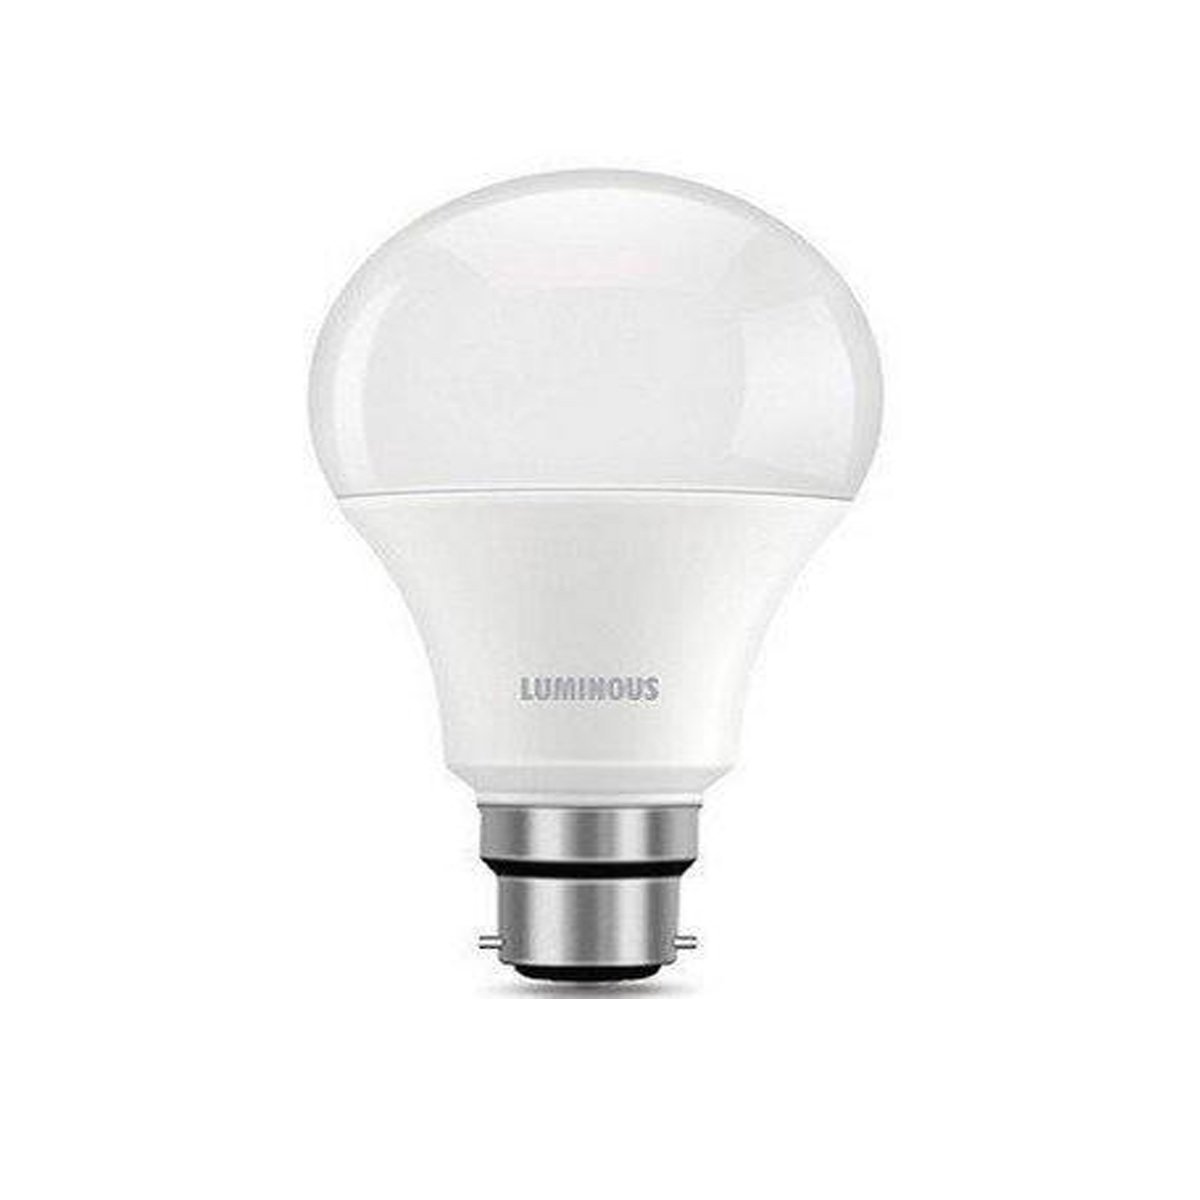 Luminous 12W Led Bulb